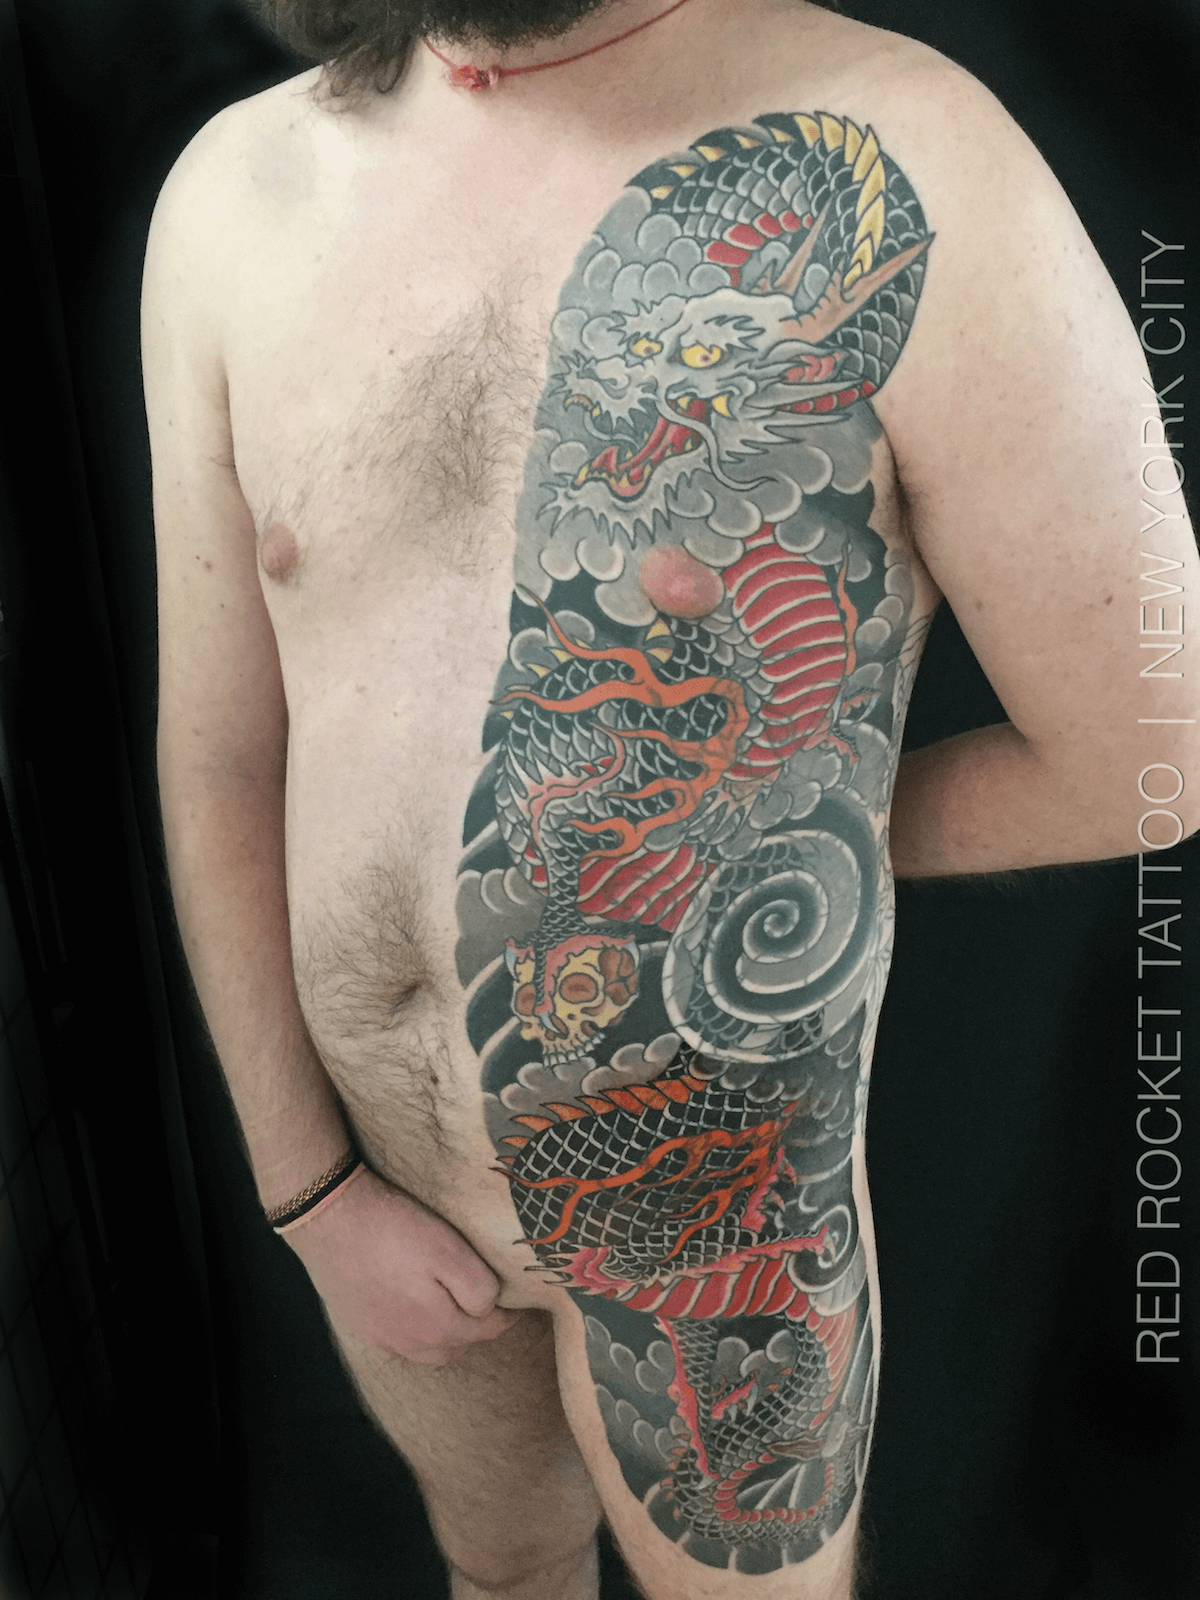 The Tattoo Shop on Twitter This japanese body suit by ianildet is  insane  thetattooshop backpiece tattooshopsupplies backtattoo  japanesetattoo japaneseart japanesetattoos bodysuit dragontattoo  irezumi httpstcoZiCTBqeQIZ  Twitter